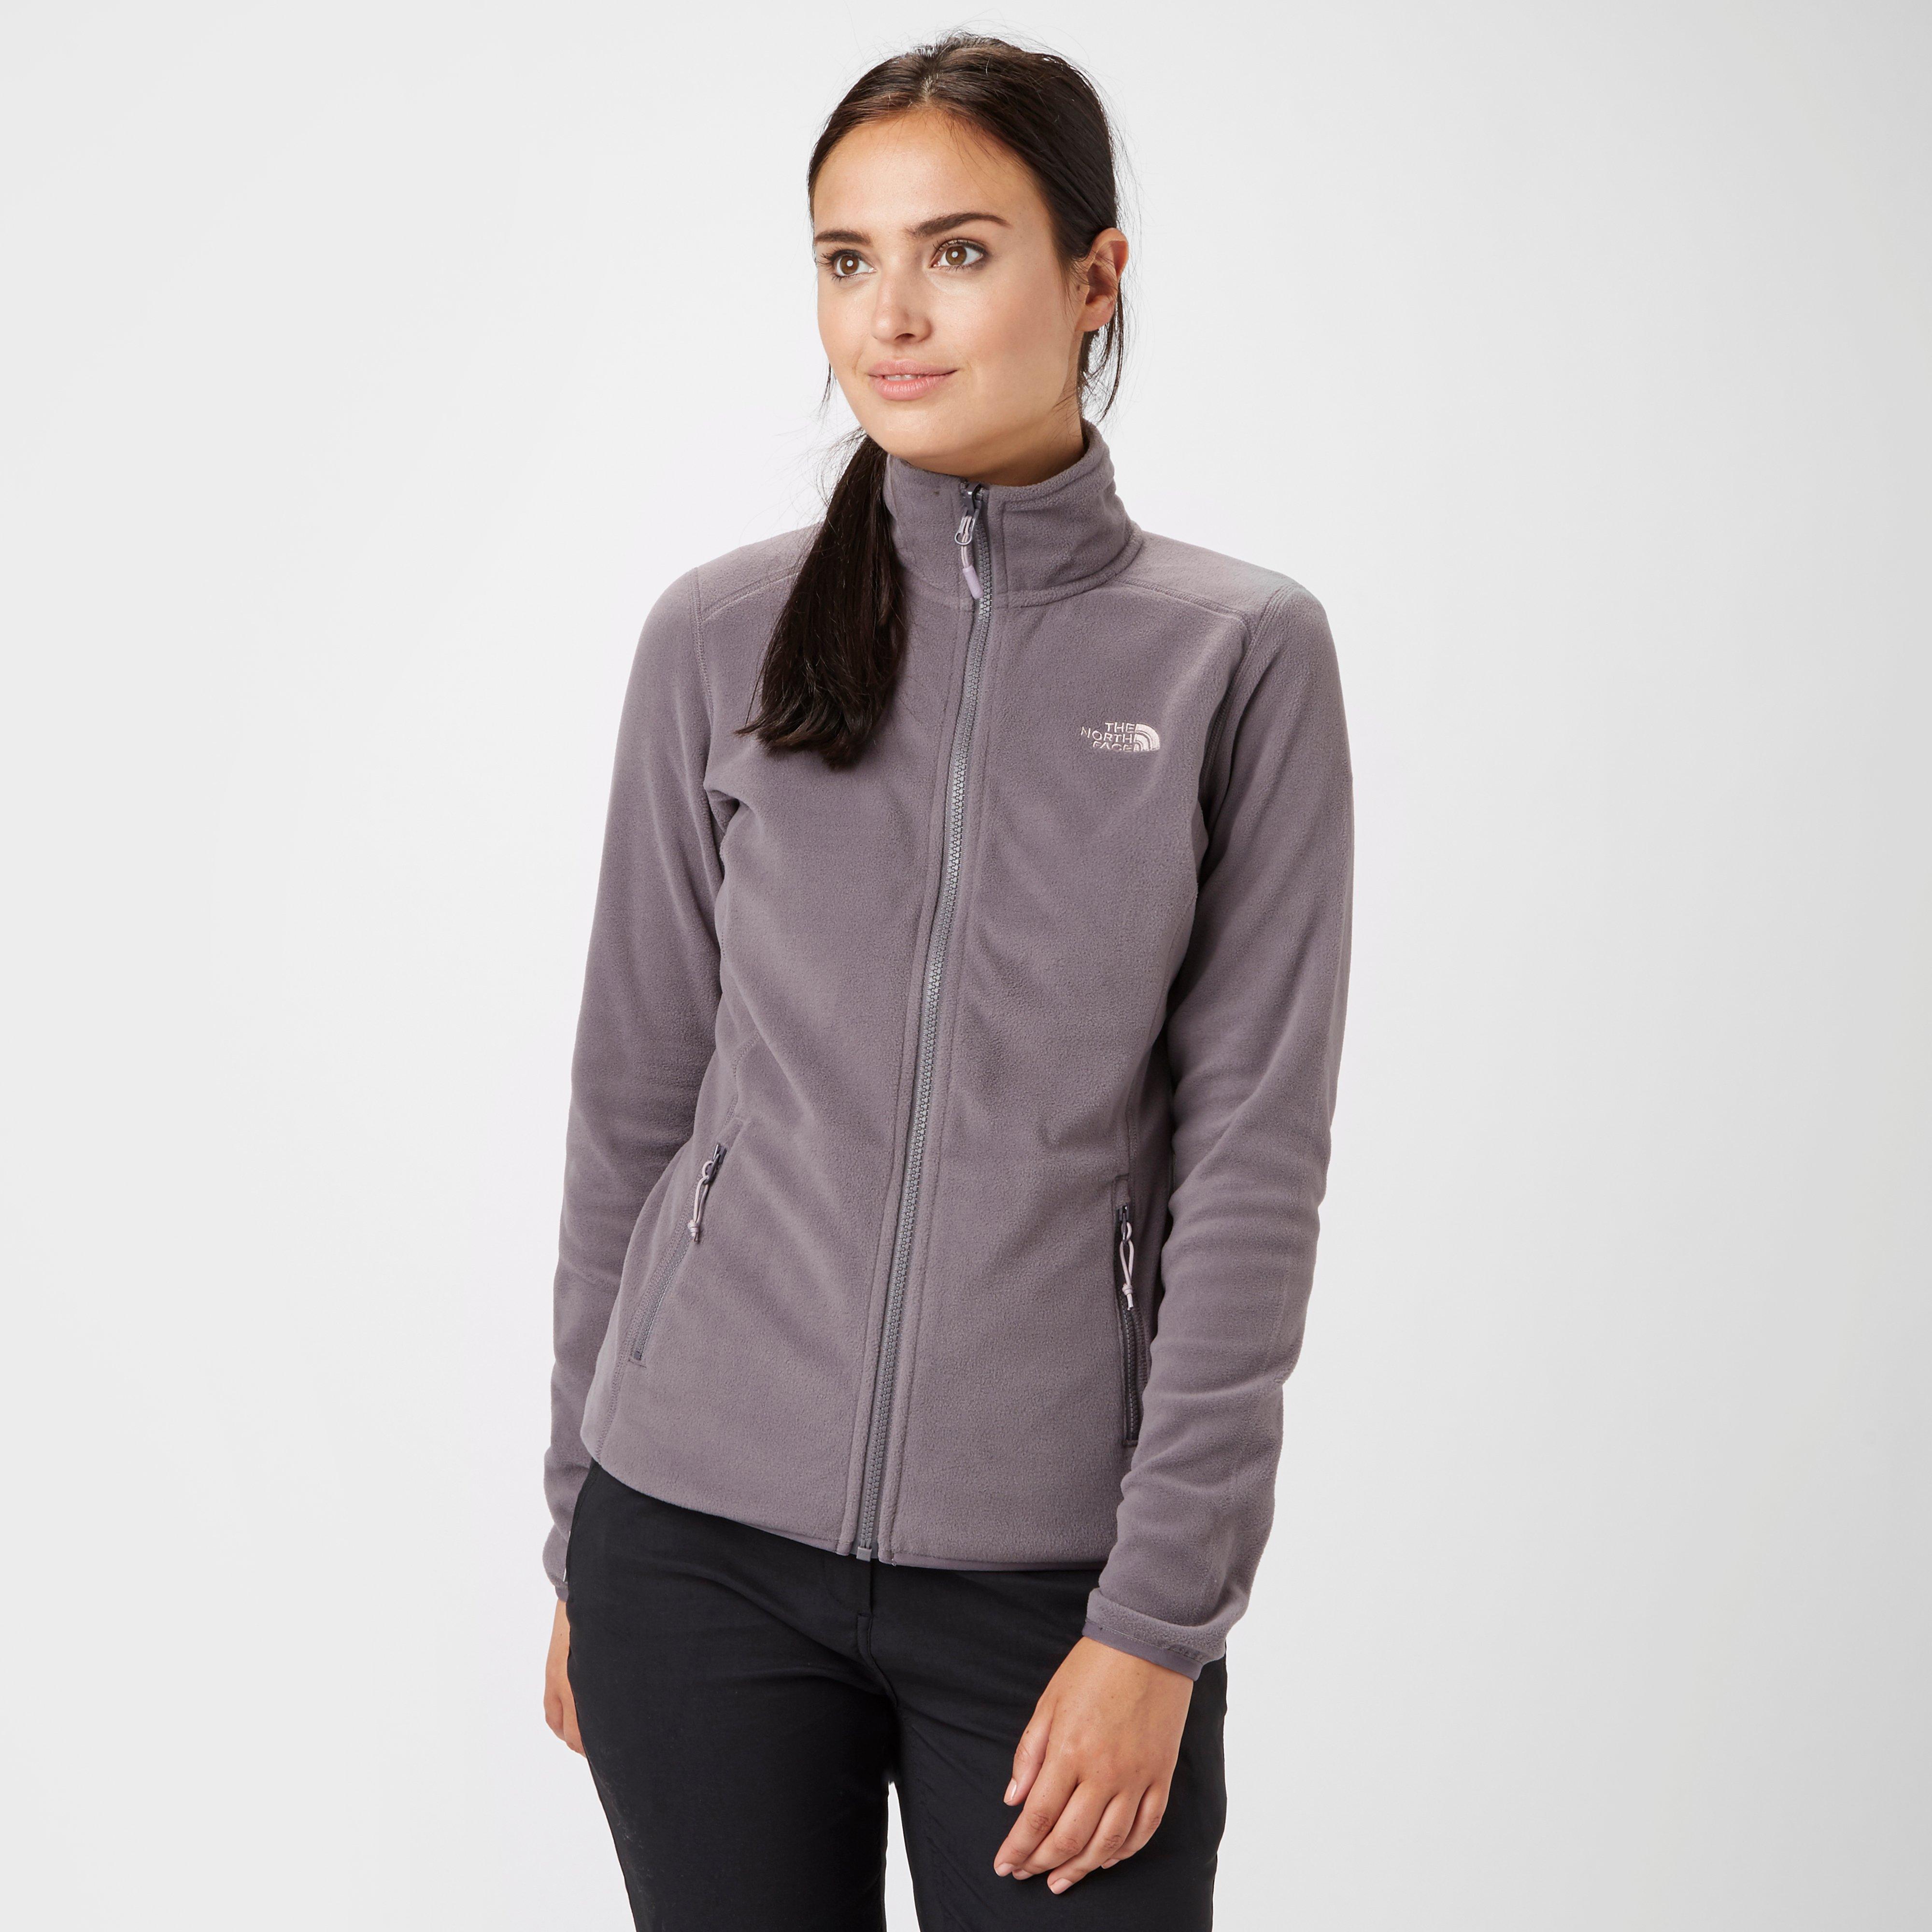 Fitted Fleece Jacket Women’S - Jacket To